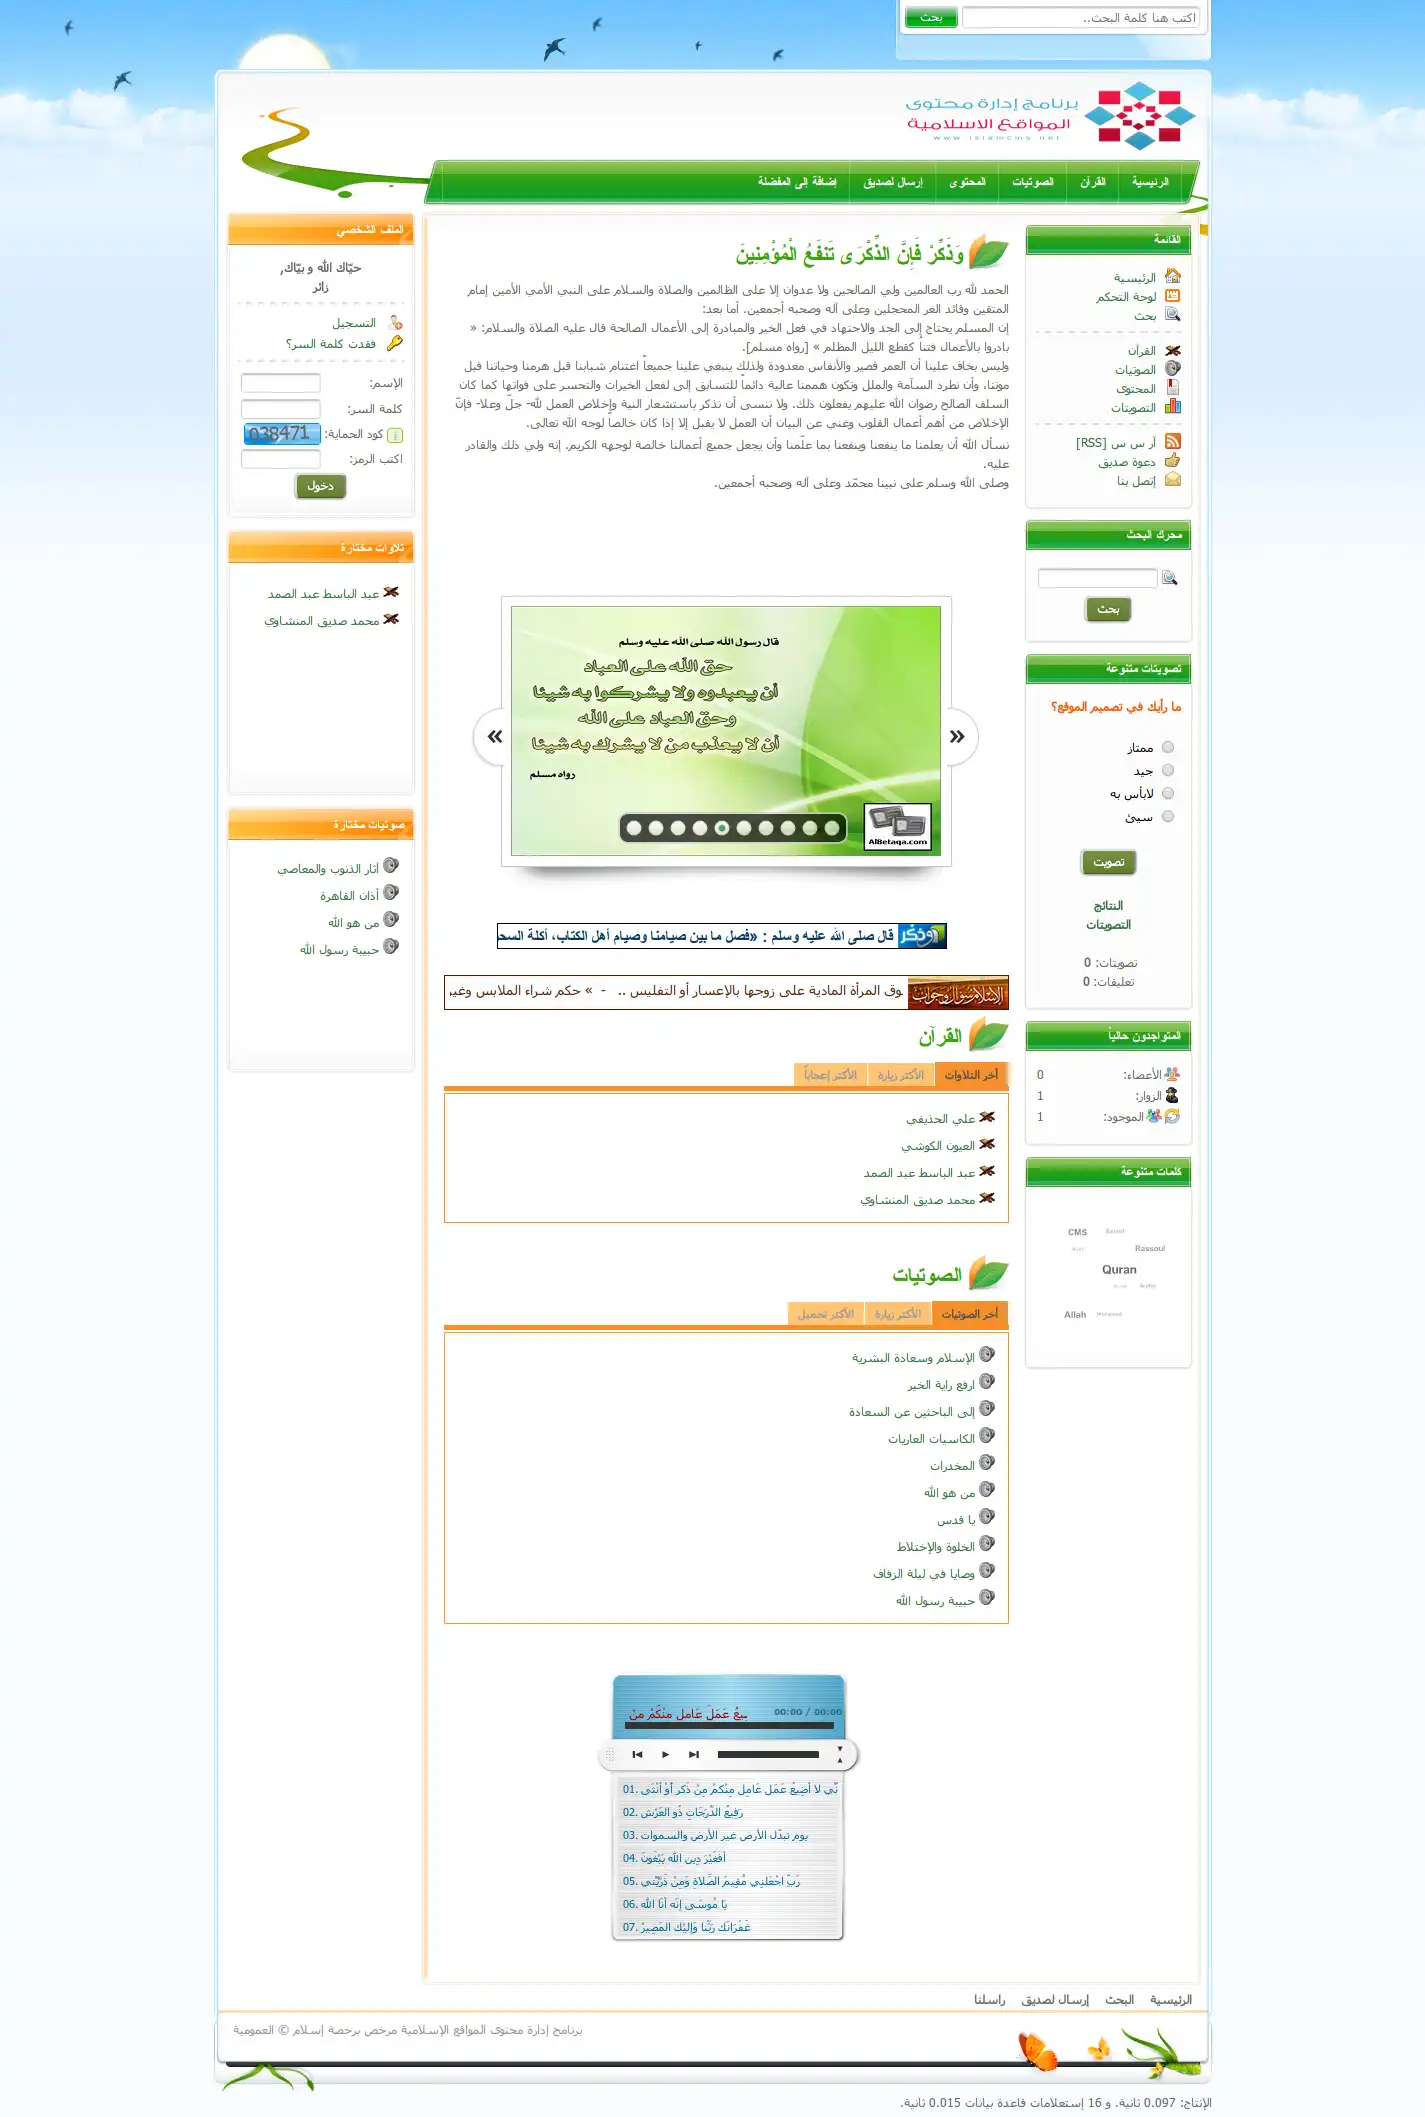 Download web tool or web app Islam CMS